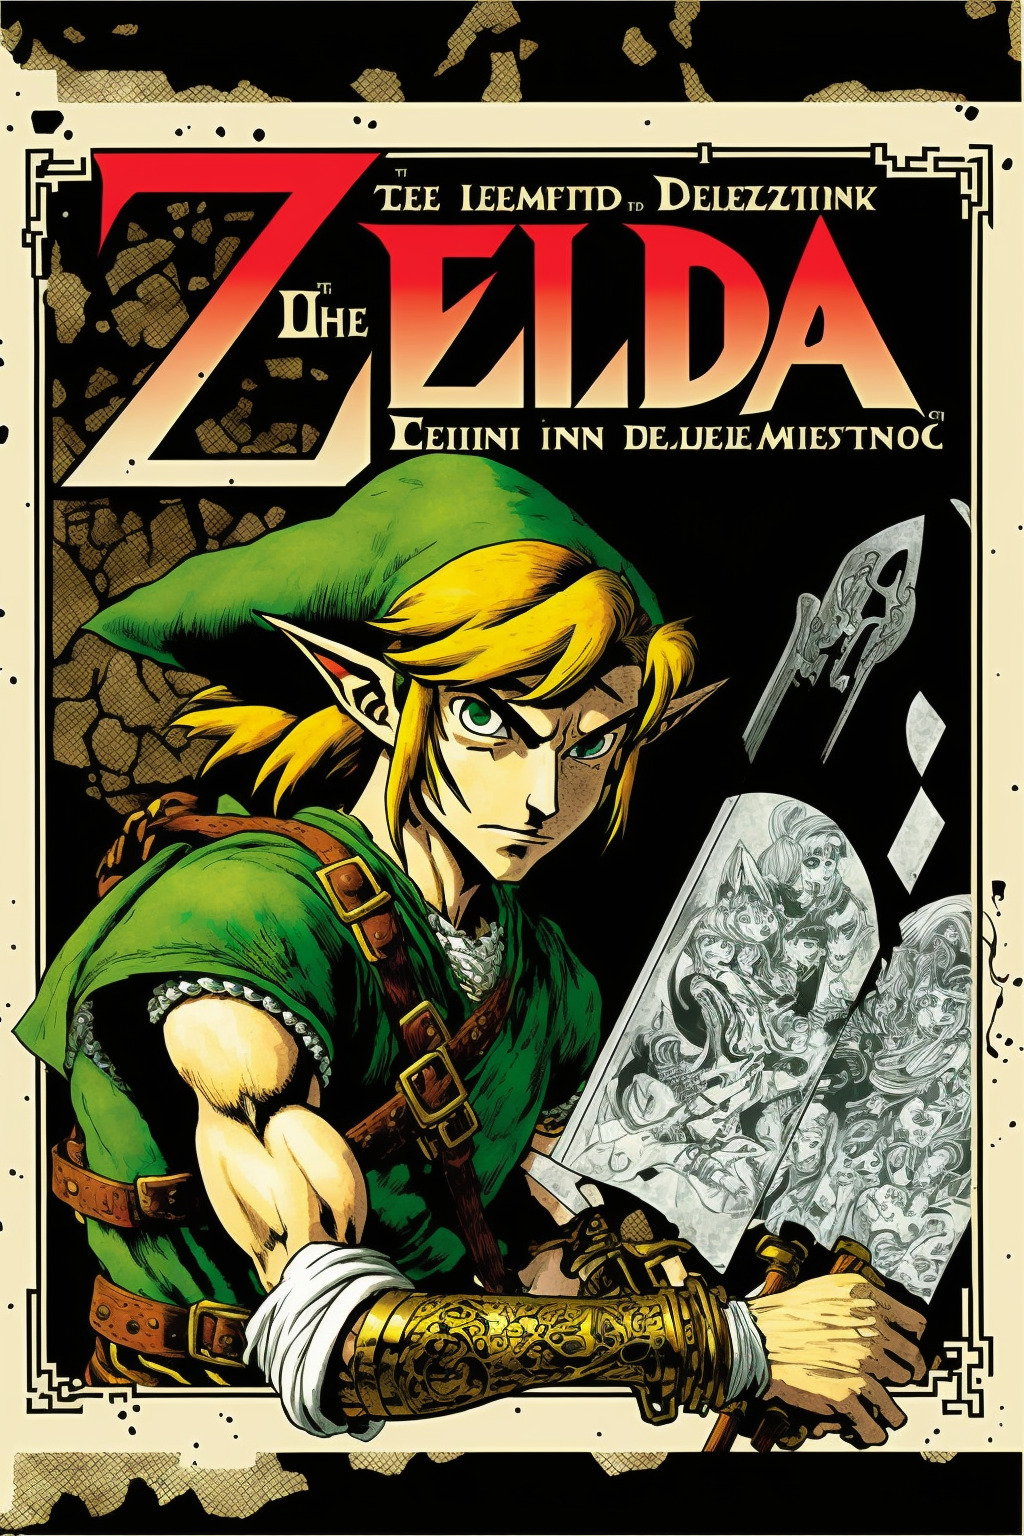 The Legend of Zelda в стиле комиксов DC